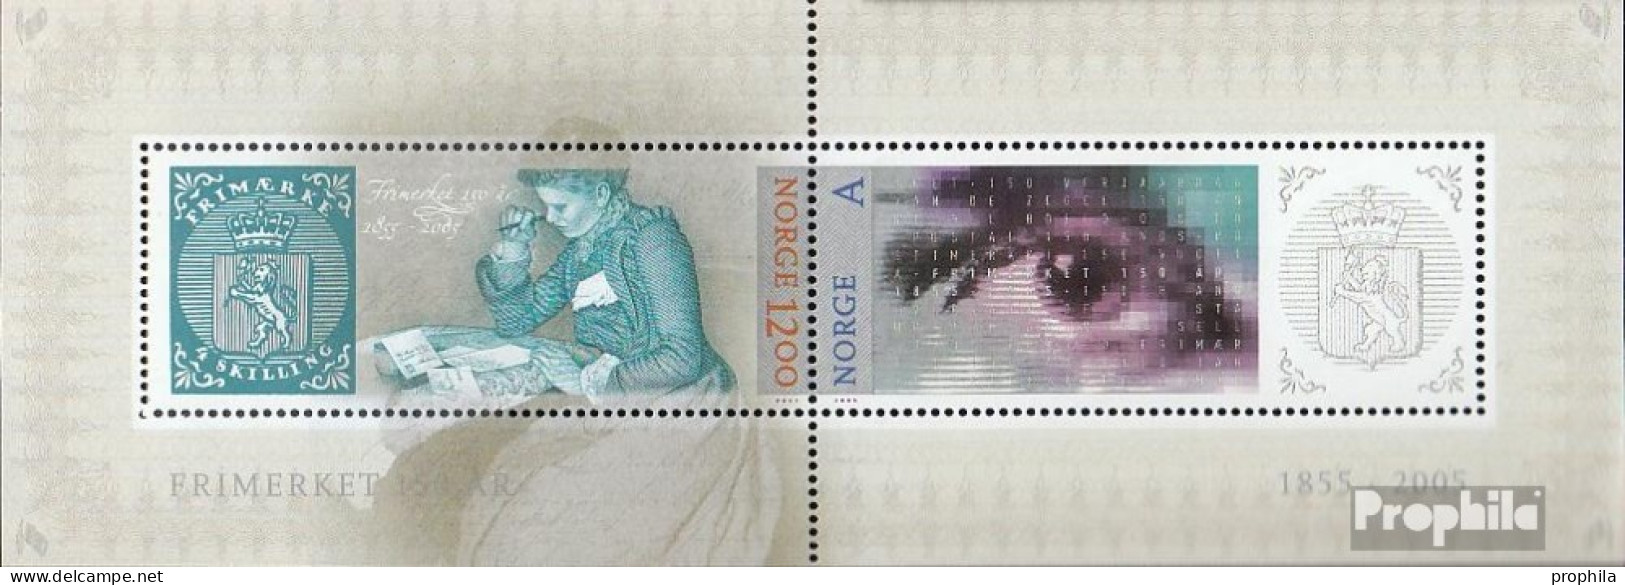 Norwegen Block29 (kompl.Ausg.) Postfrisch 2005 Norwegische Briefmarke - Unused Stamps